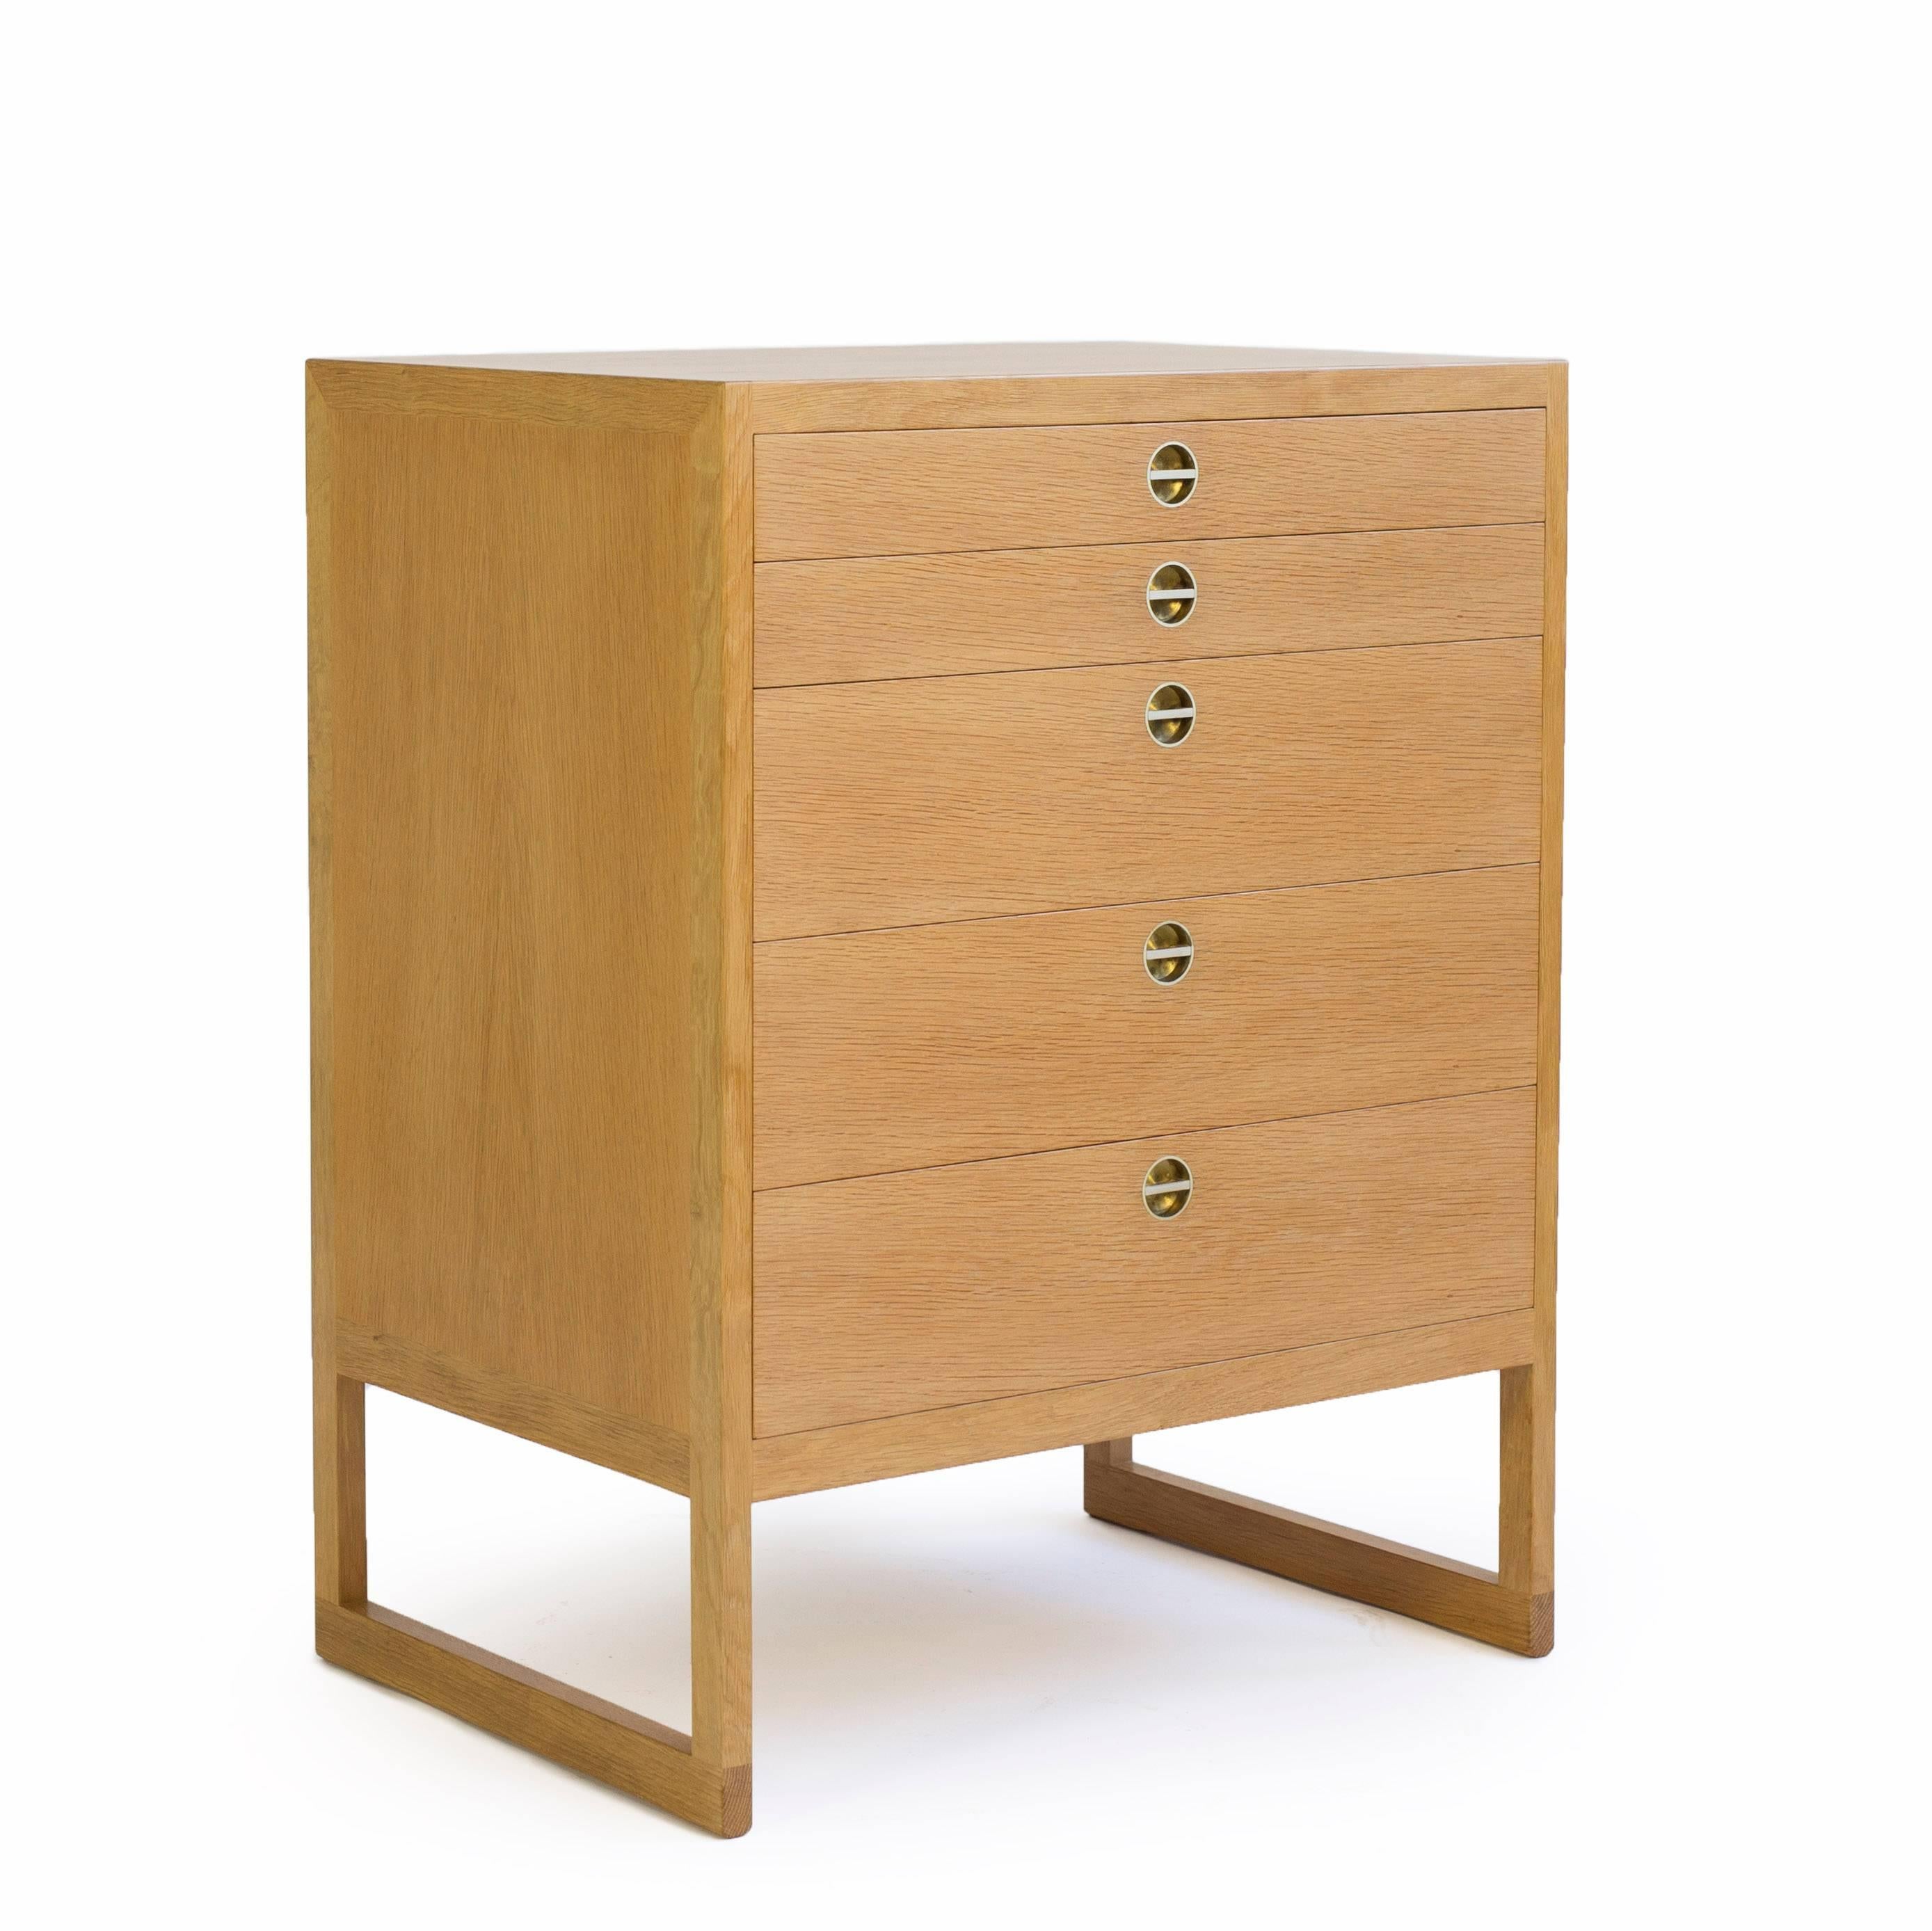 A Børge Mogensen oak chest of five drawers with brass handles. 

Designed by Børge Mogensen 1957, manufactured by cabinetmaker P. Lauritsen & Son, Denmark. 

